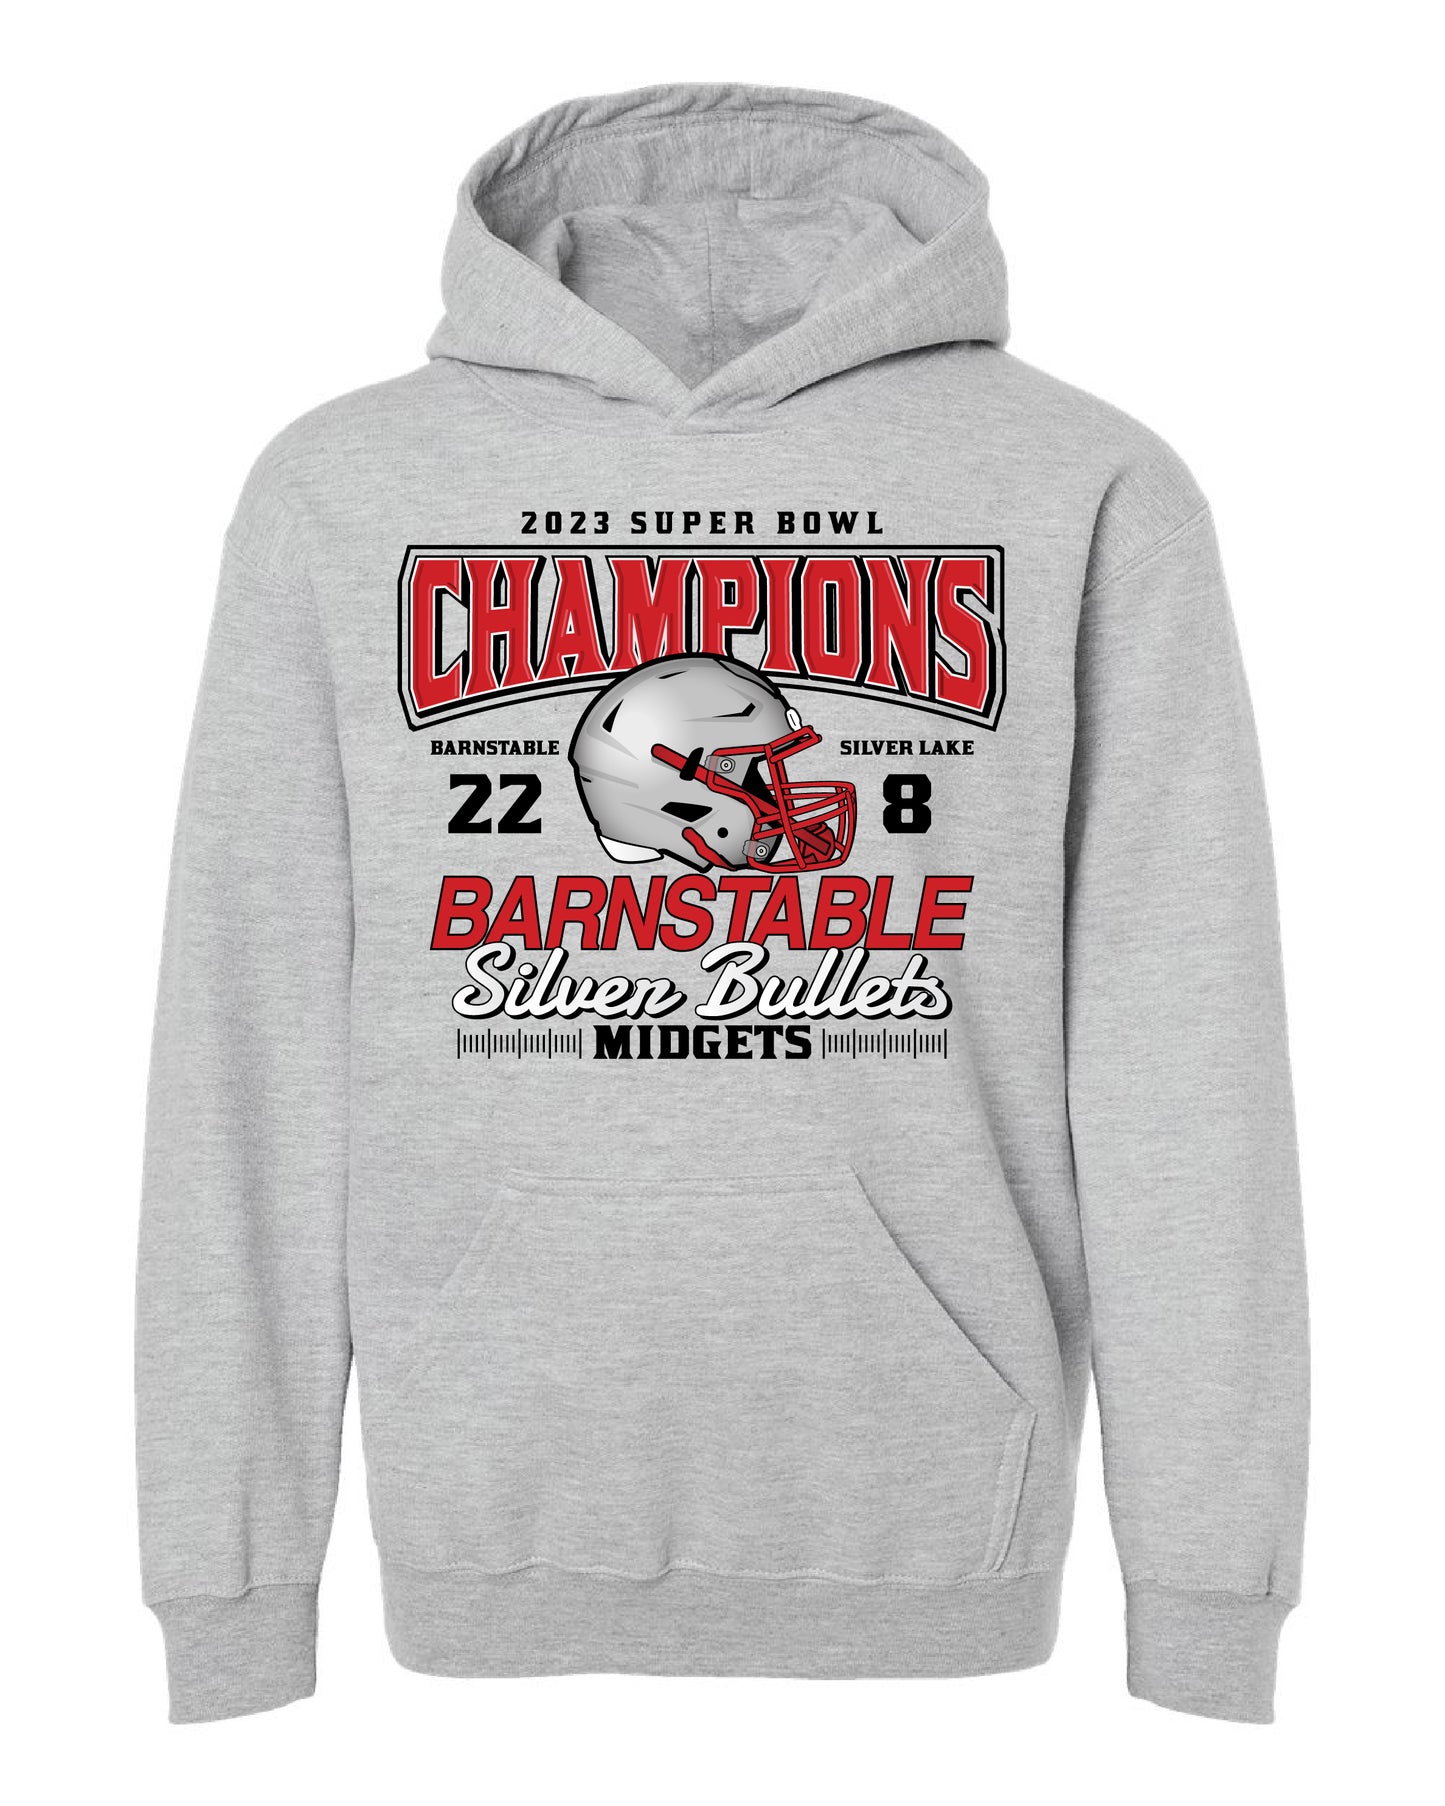 Barnstable Silver Bullets - Midgets Championship Youth Hooded Sweatshirt